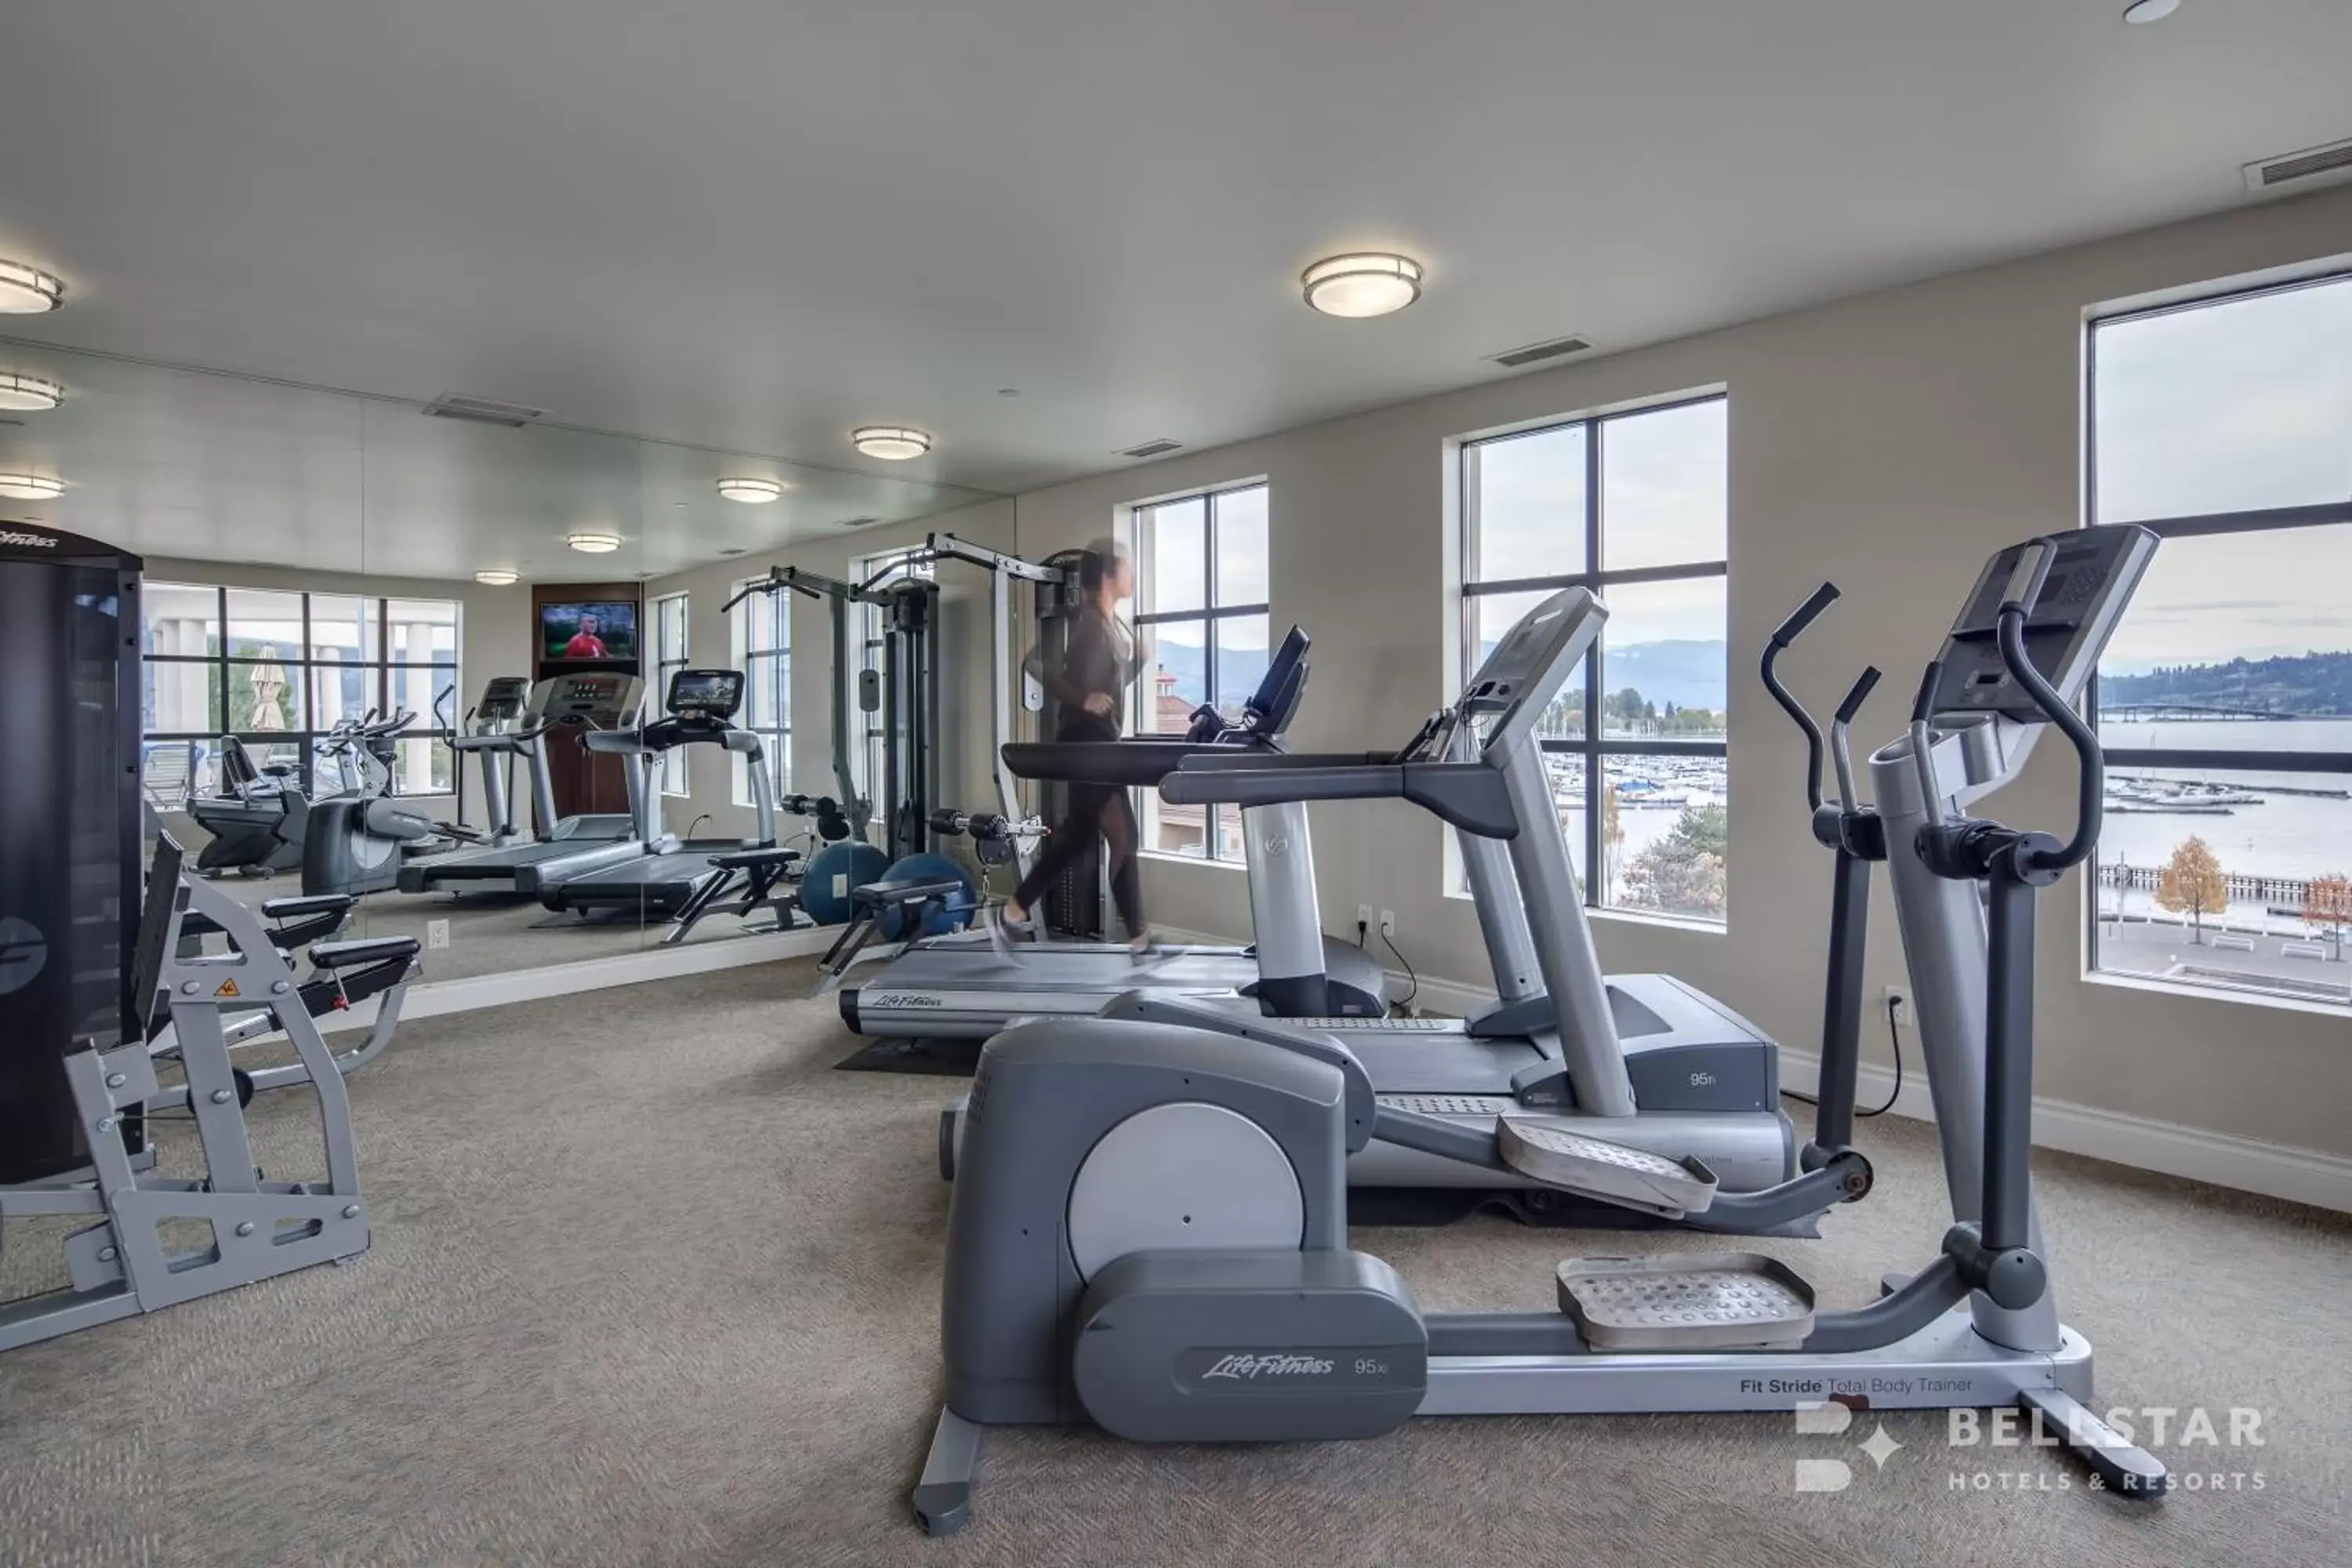 Fitness centre/facilities, Fitness Center/Facilities in The Royal Kelowna - Bellstar Hotels & Resorts